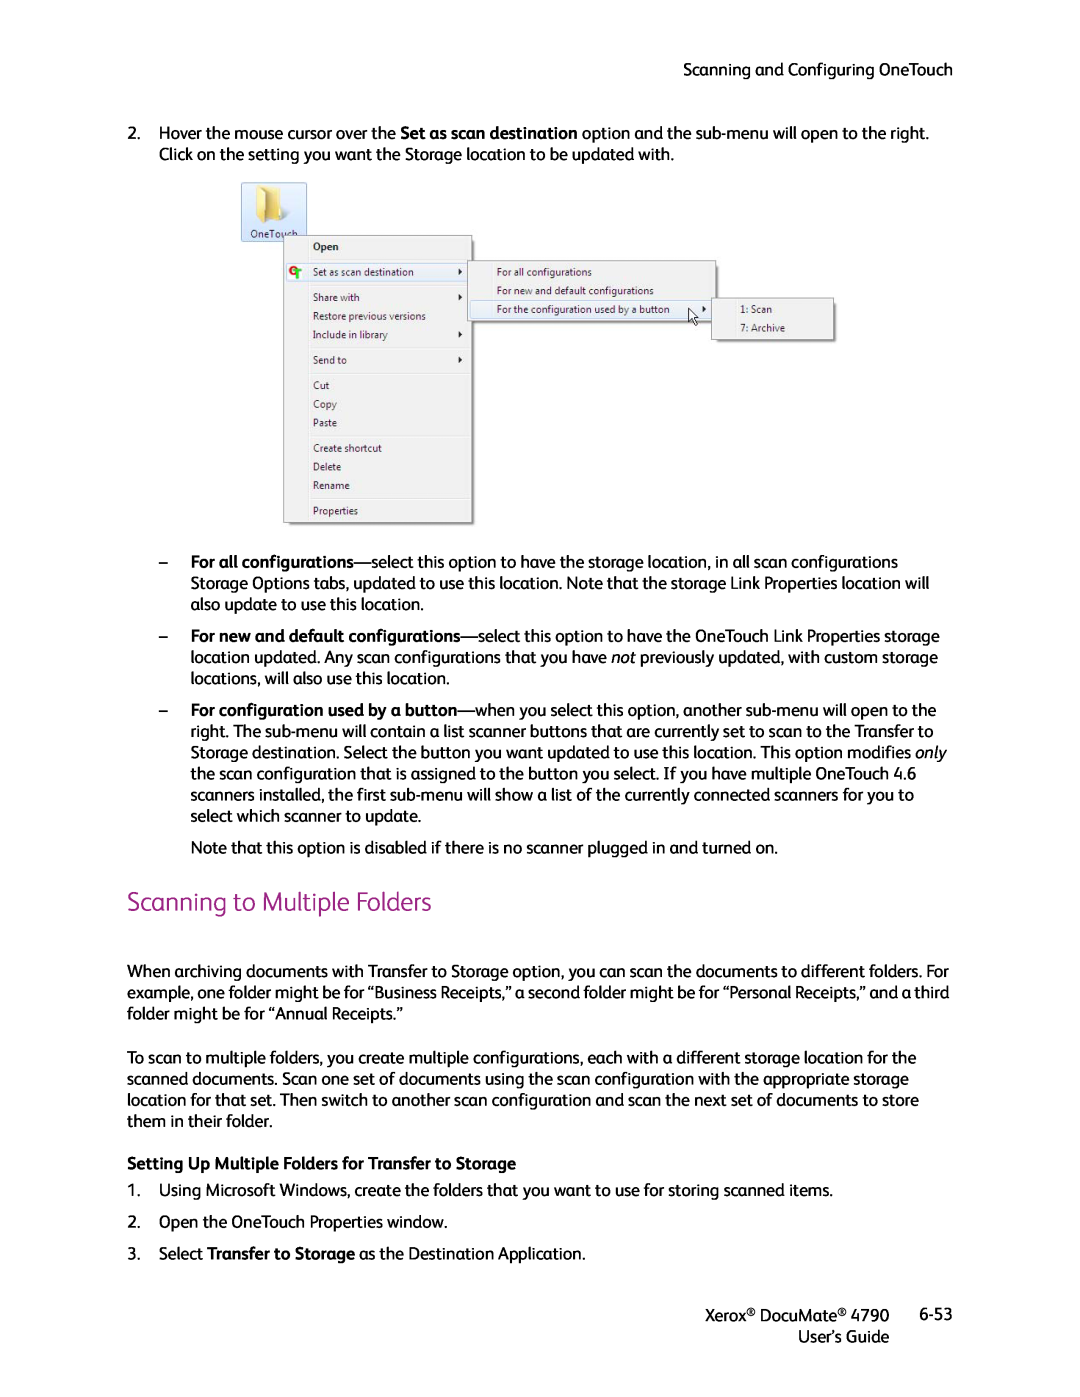 Xerox xerox documate manual Scanning to Multiple Folders, Setting Up Multiple Folders for Transfer to Storage 